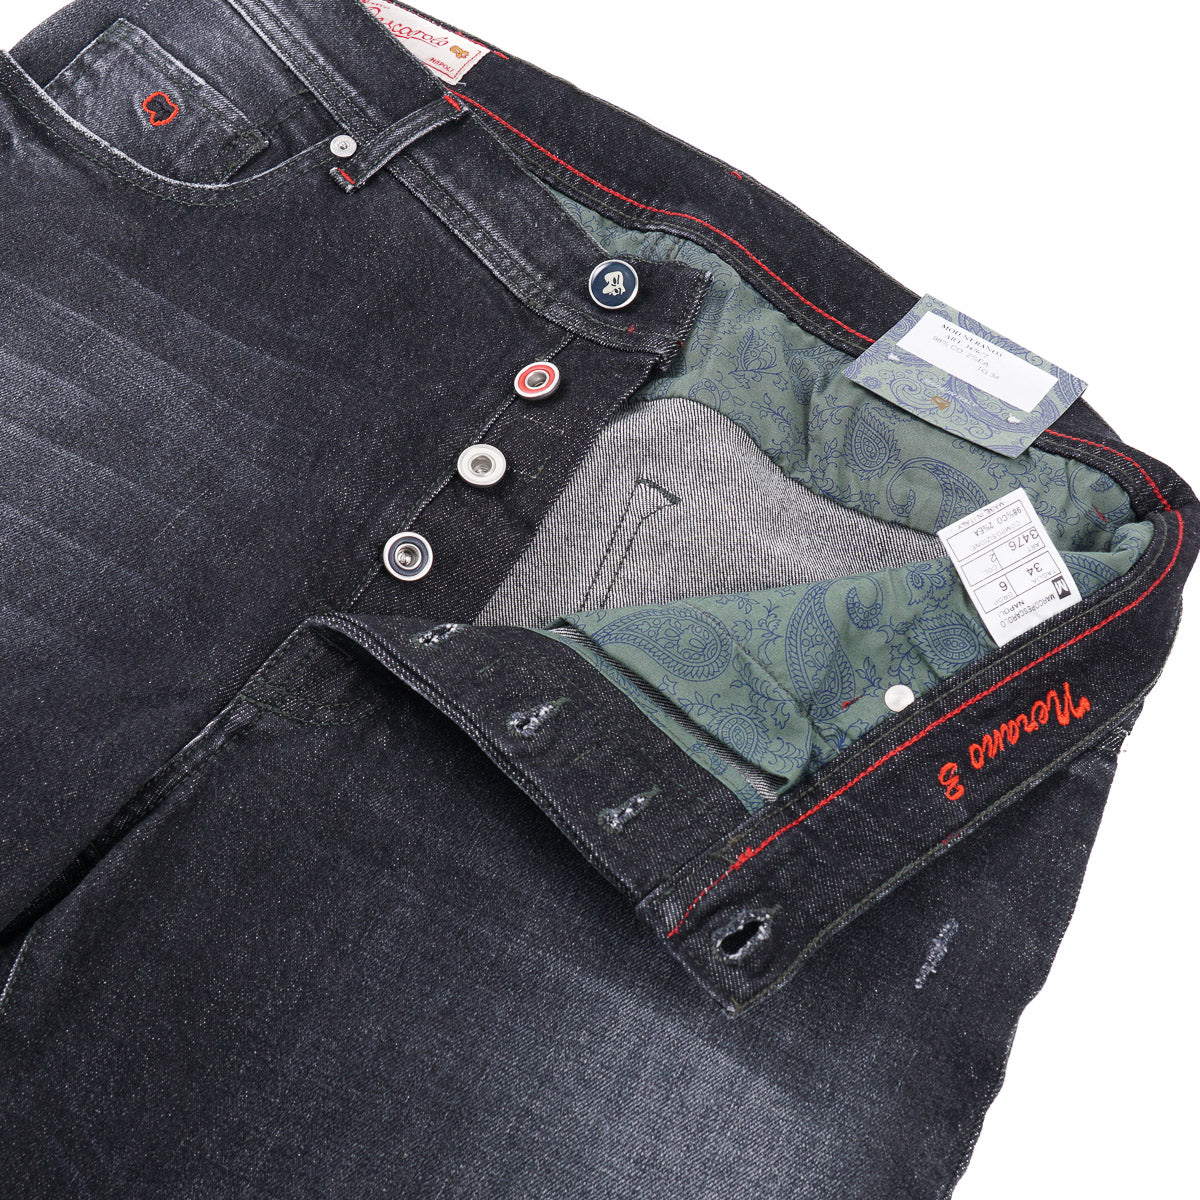 Marco Pescarolo Classic-Fit Denim Jeans - Top Shelf Apparel